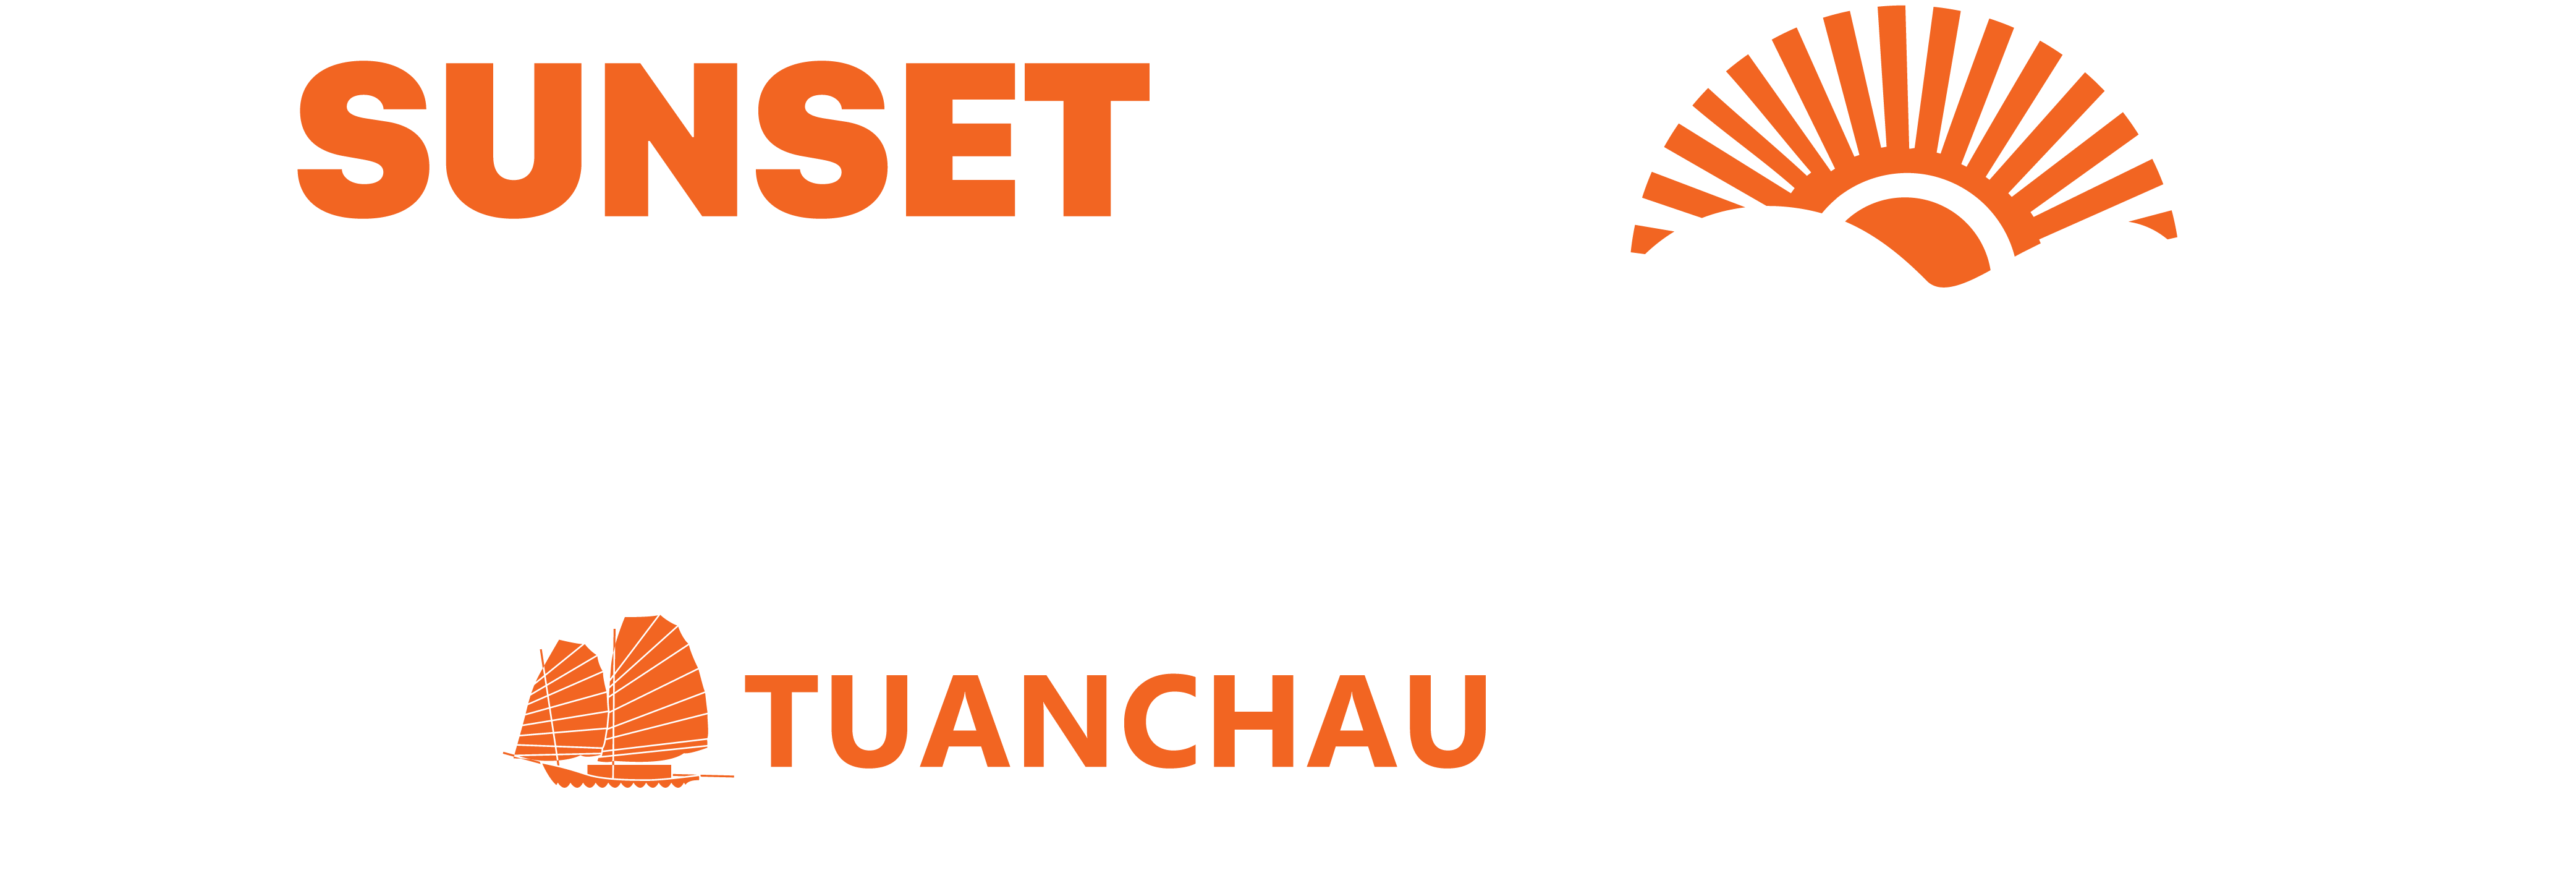 Sunset Bay Triathlon 2020